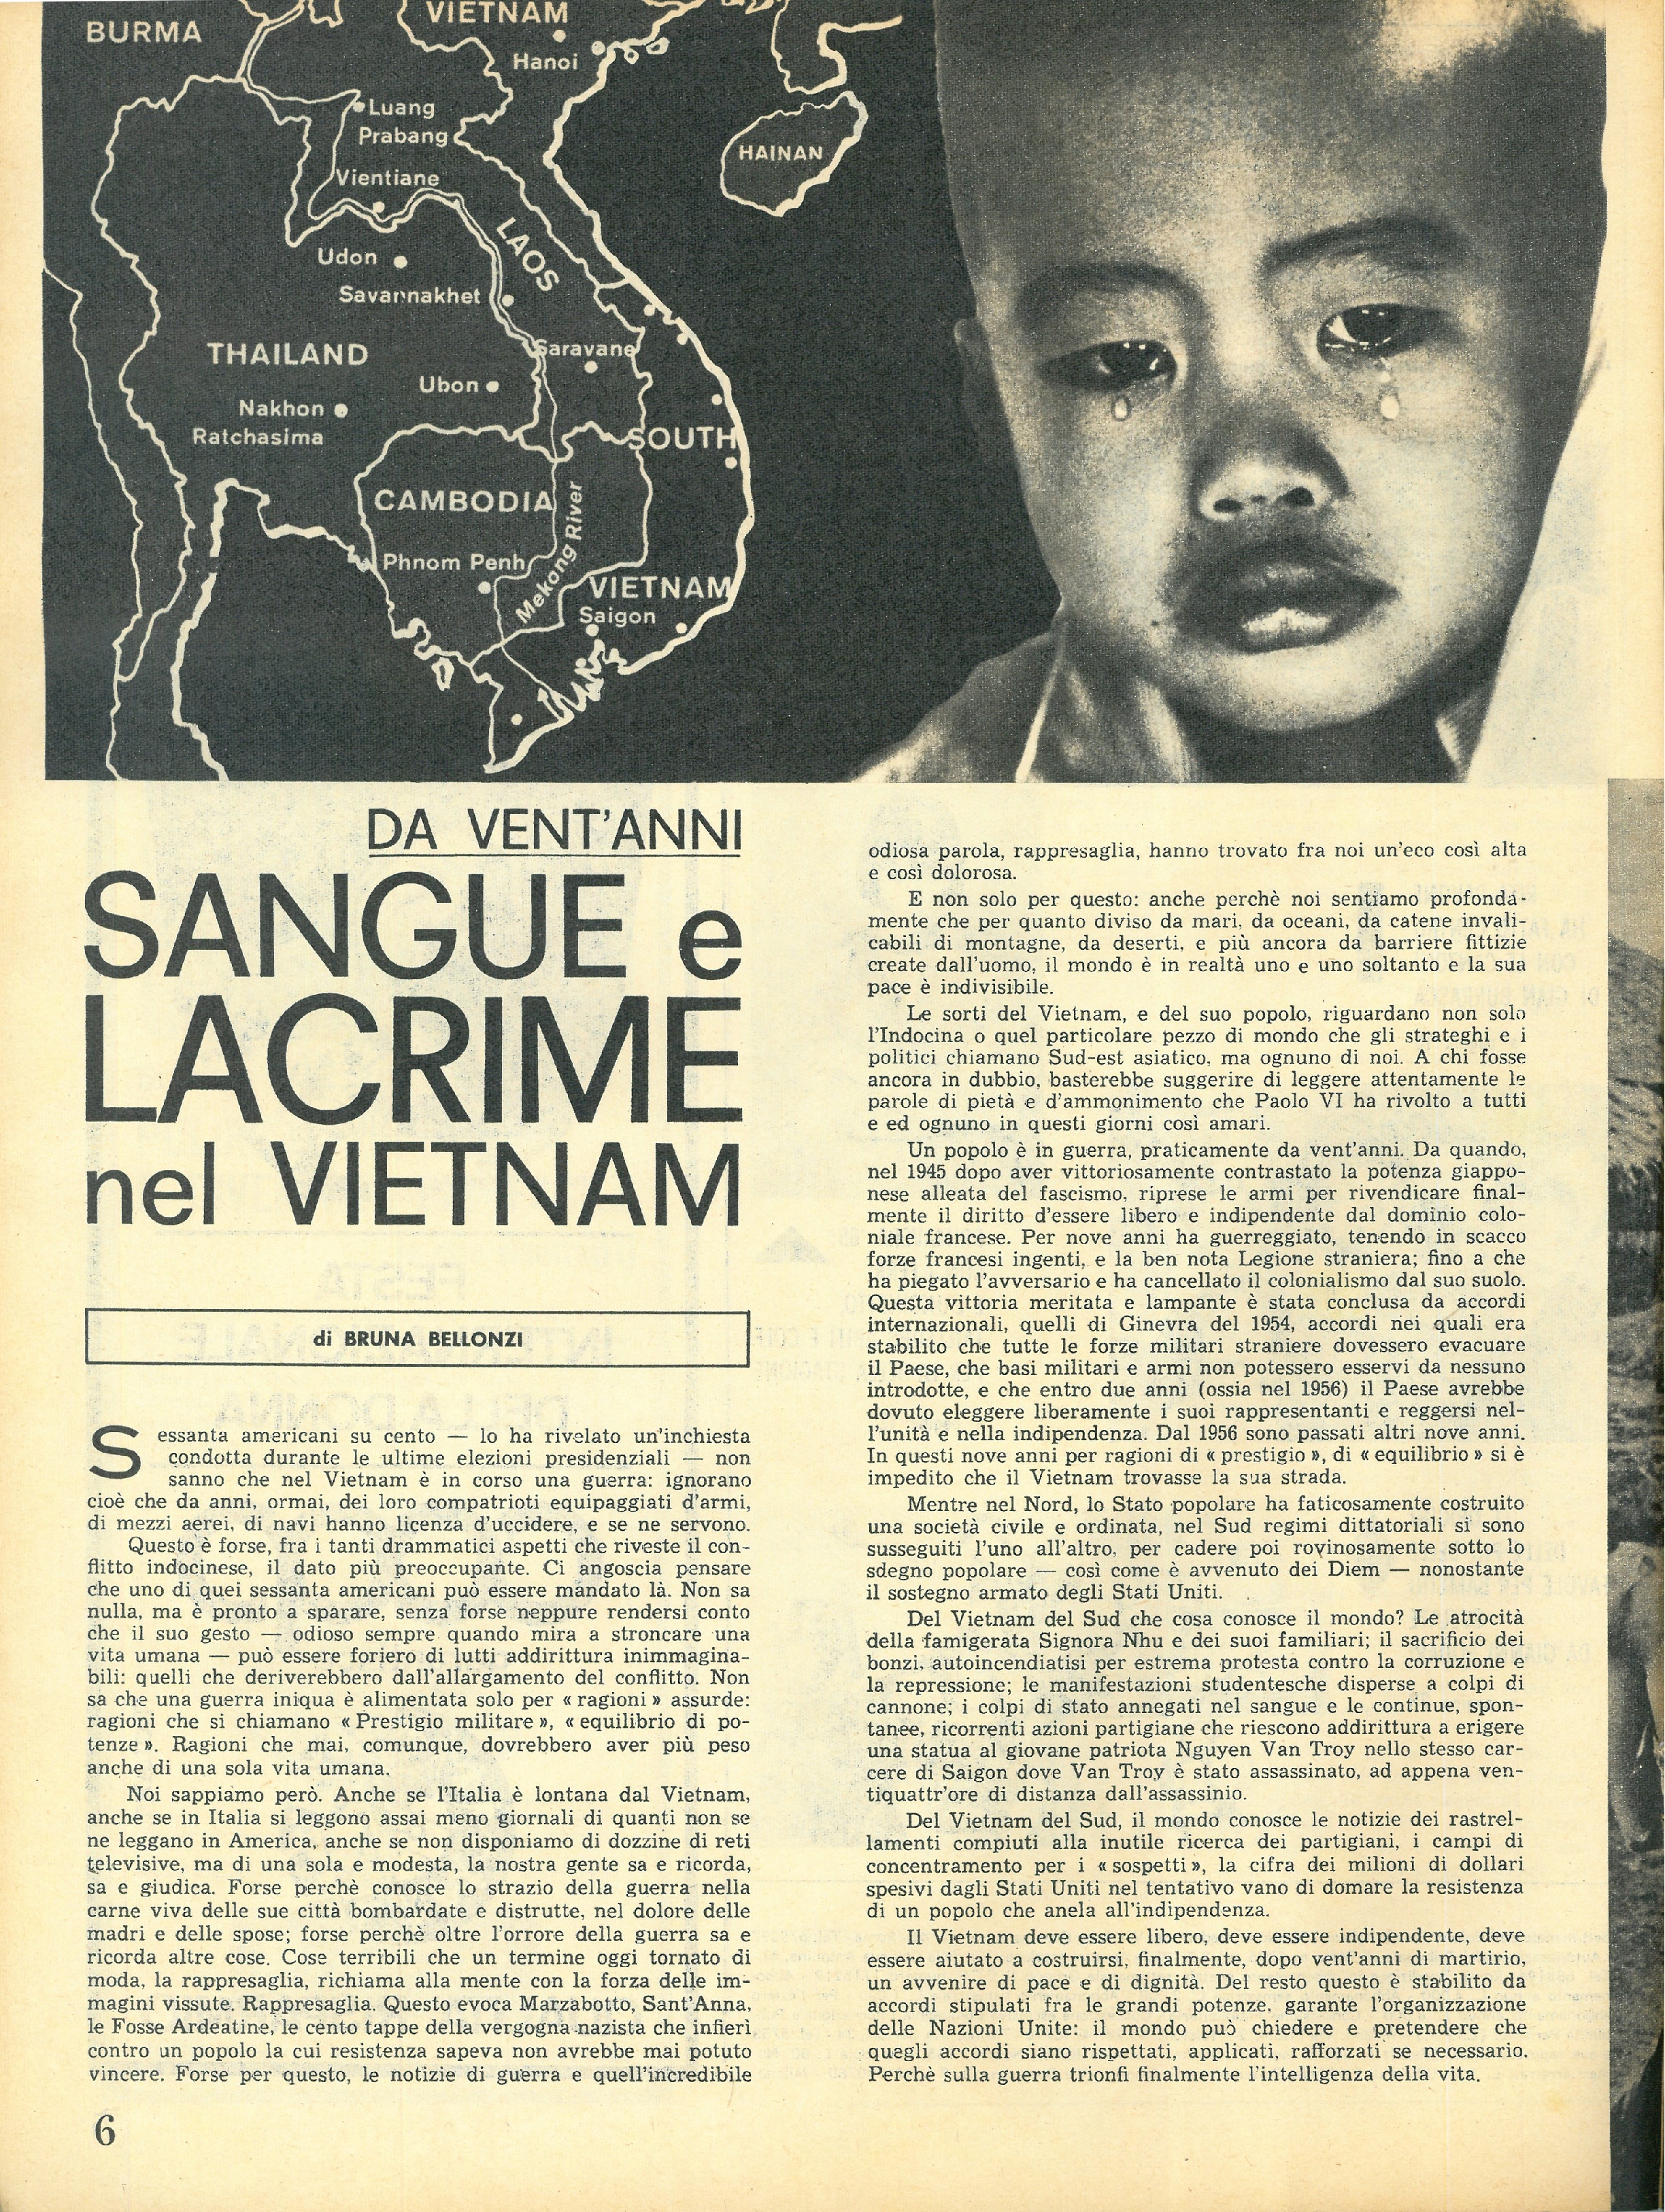 Foto: Sangue e lacrime nel Vietnam